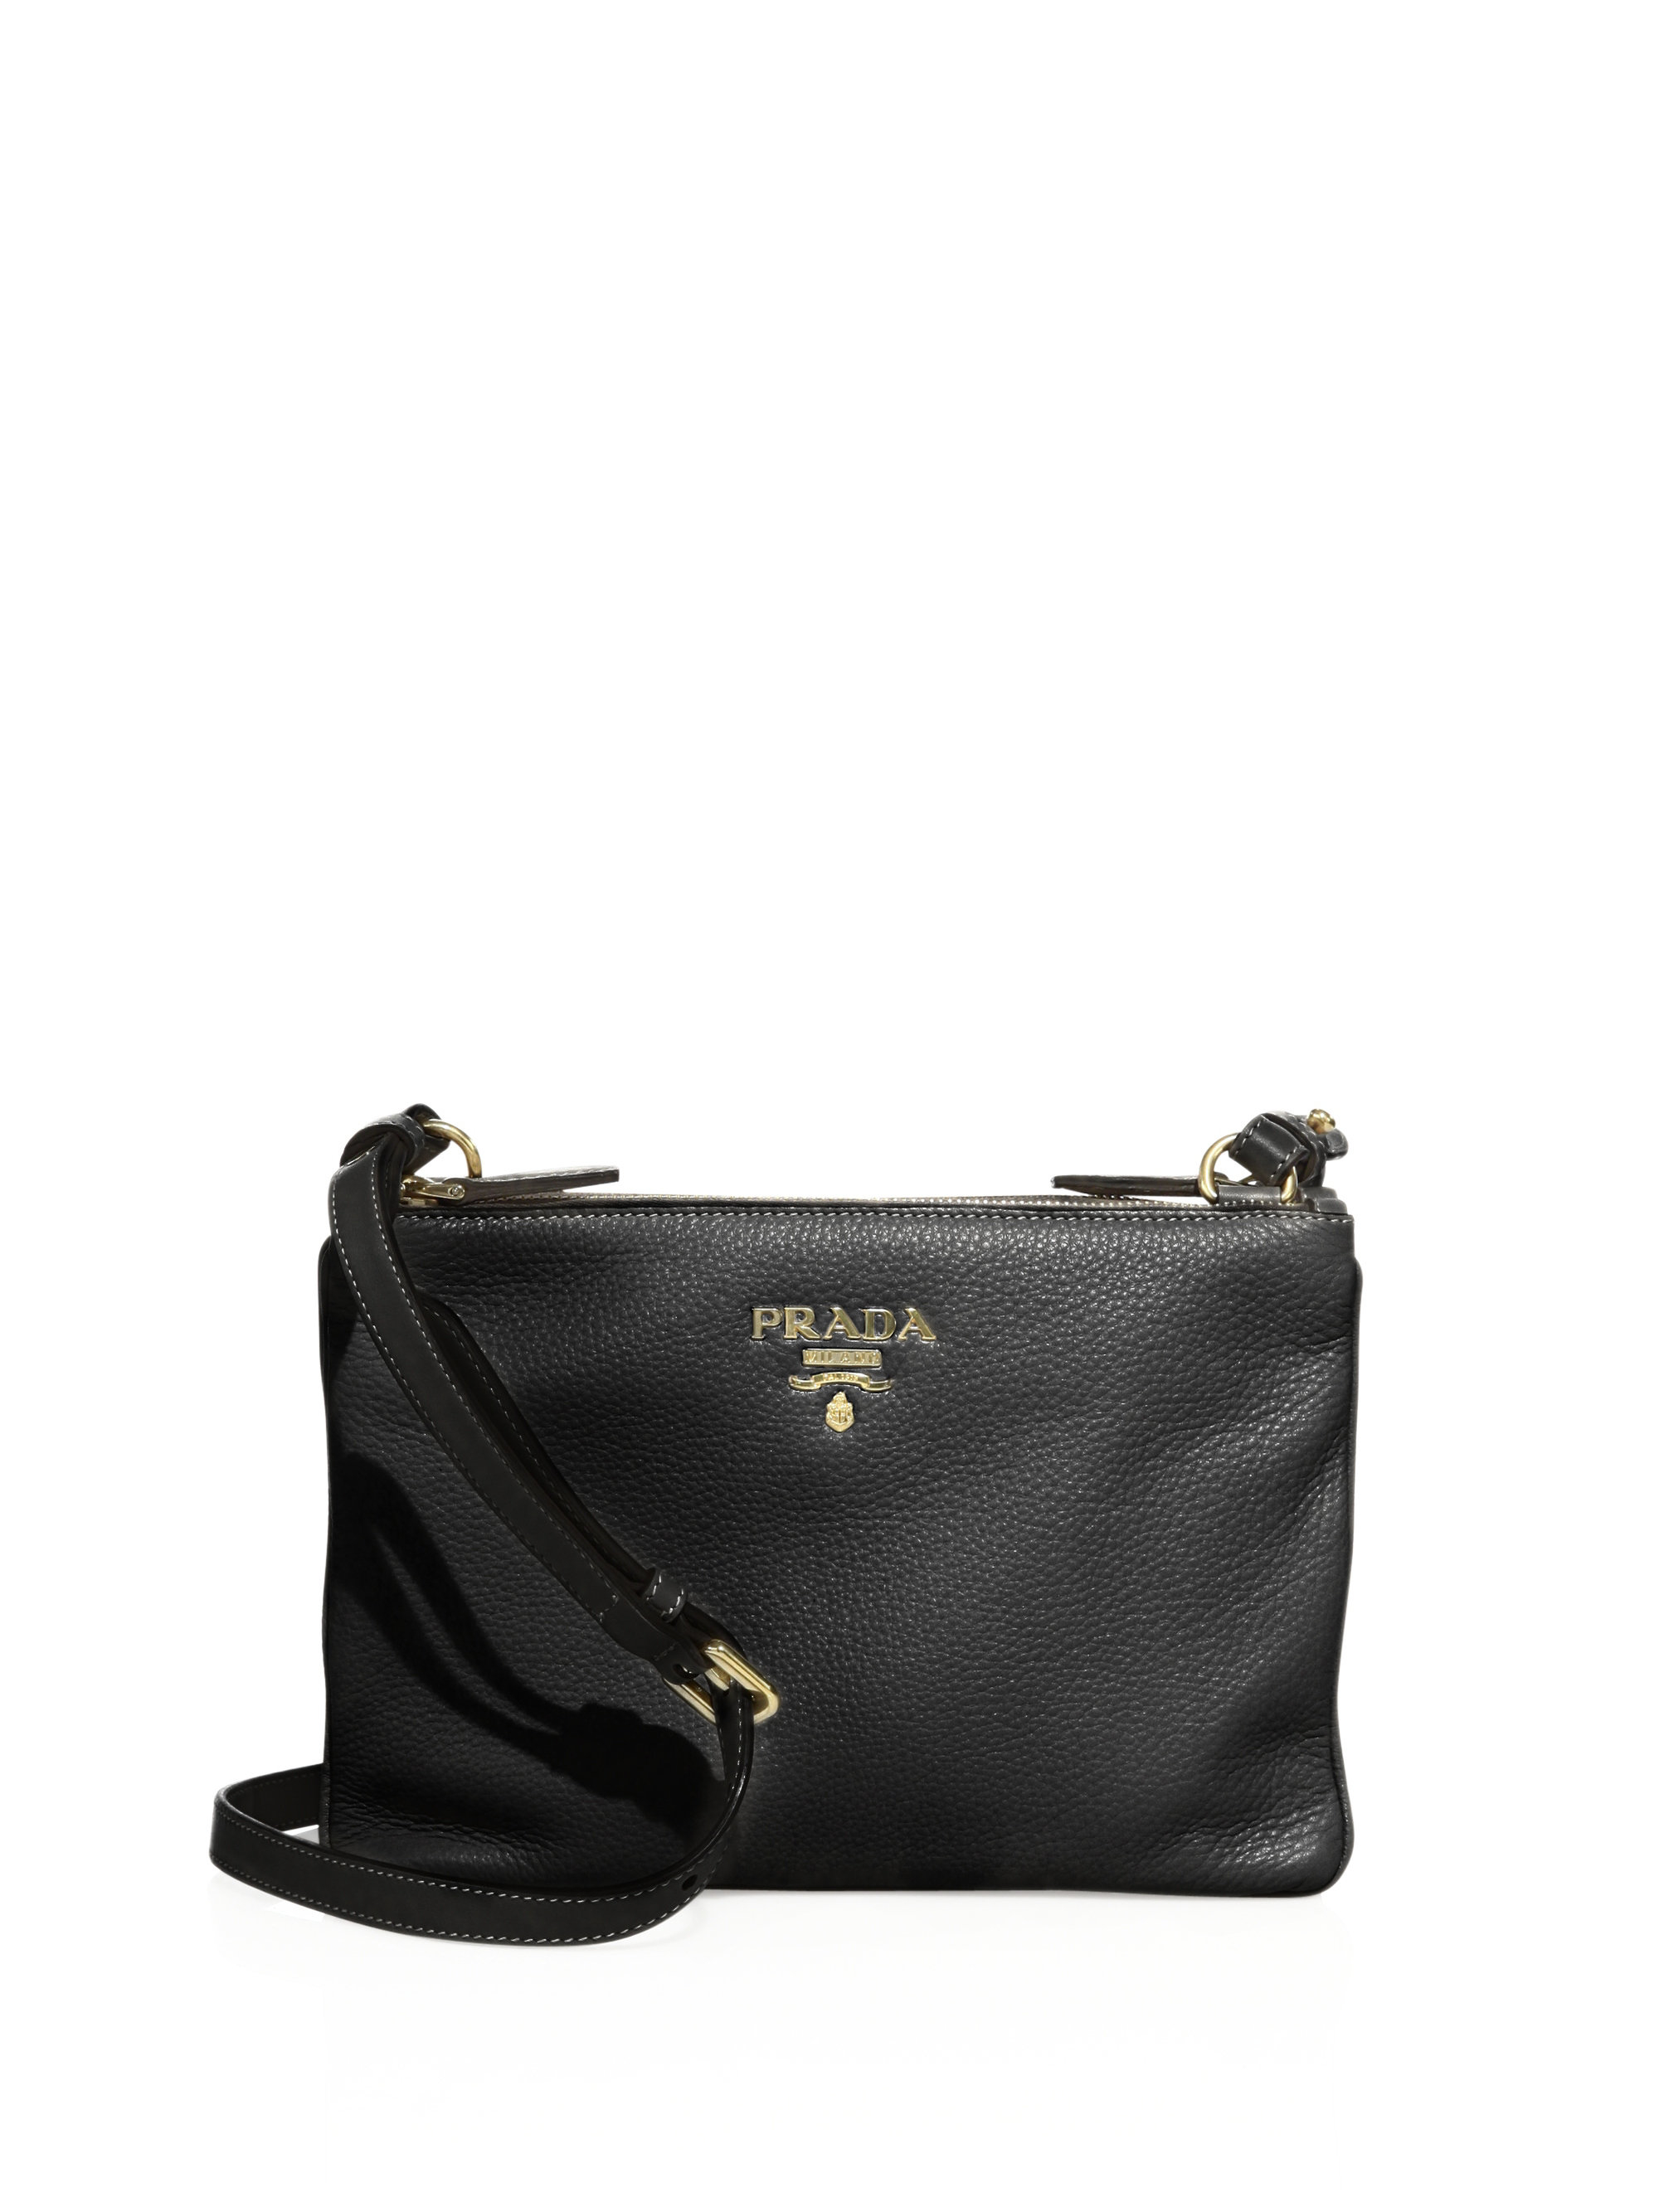 Prada Leather Crossbody Bag in Black - Save 19% | Lyst